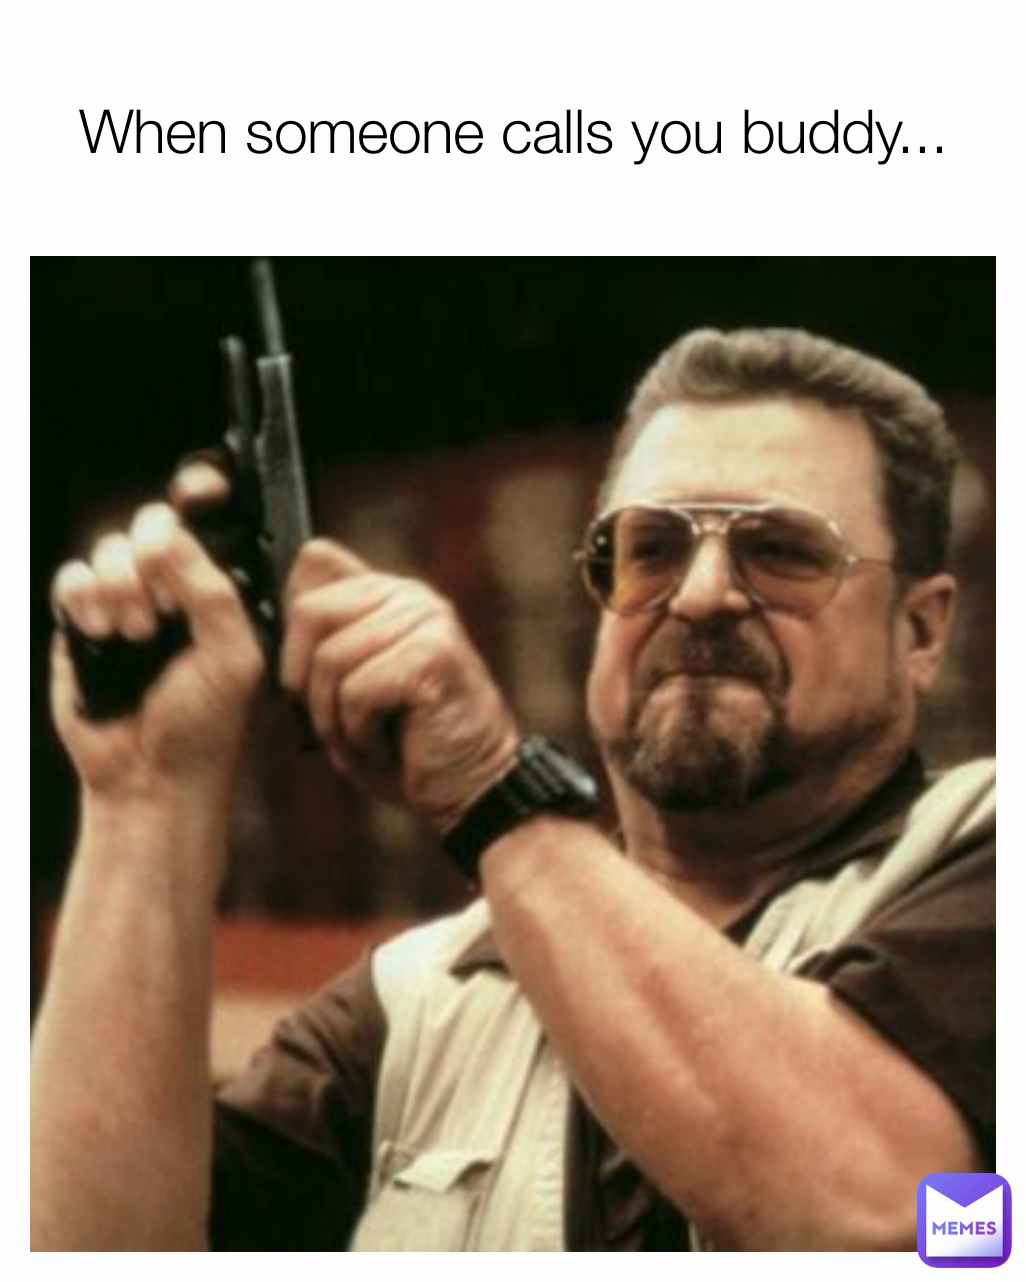 When someone calls you buddy...